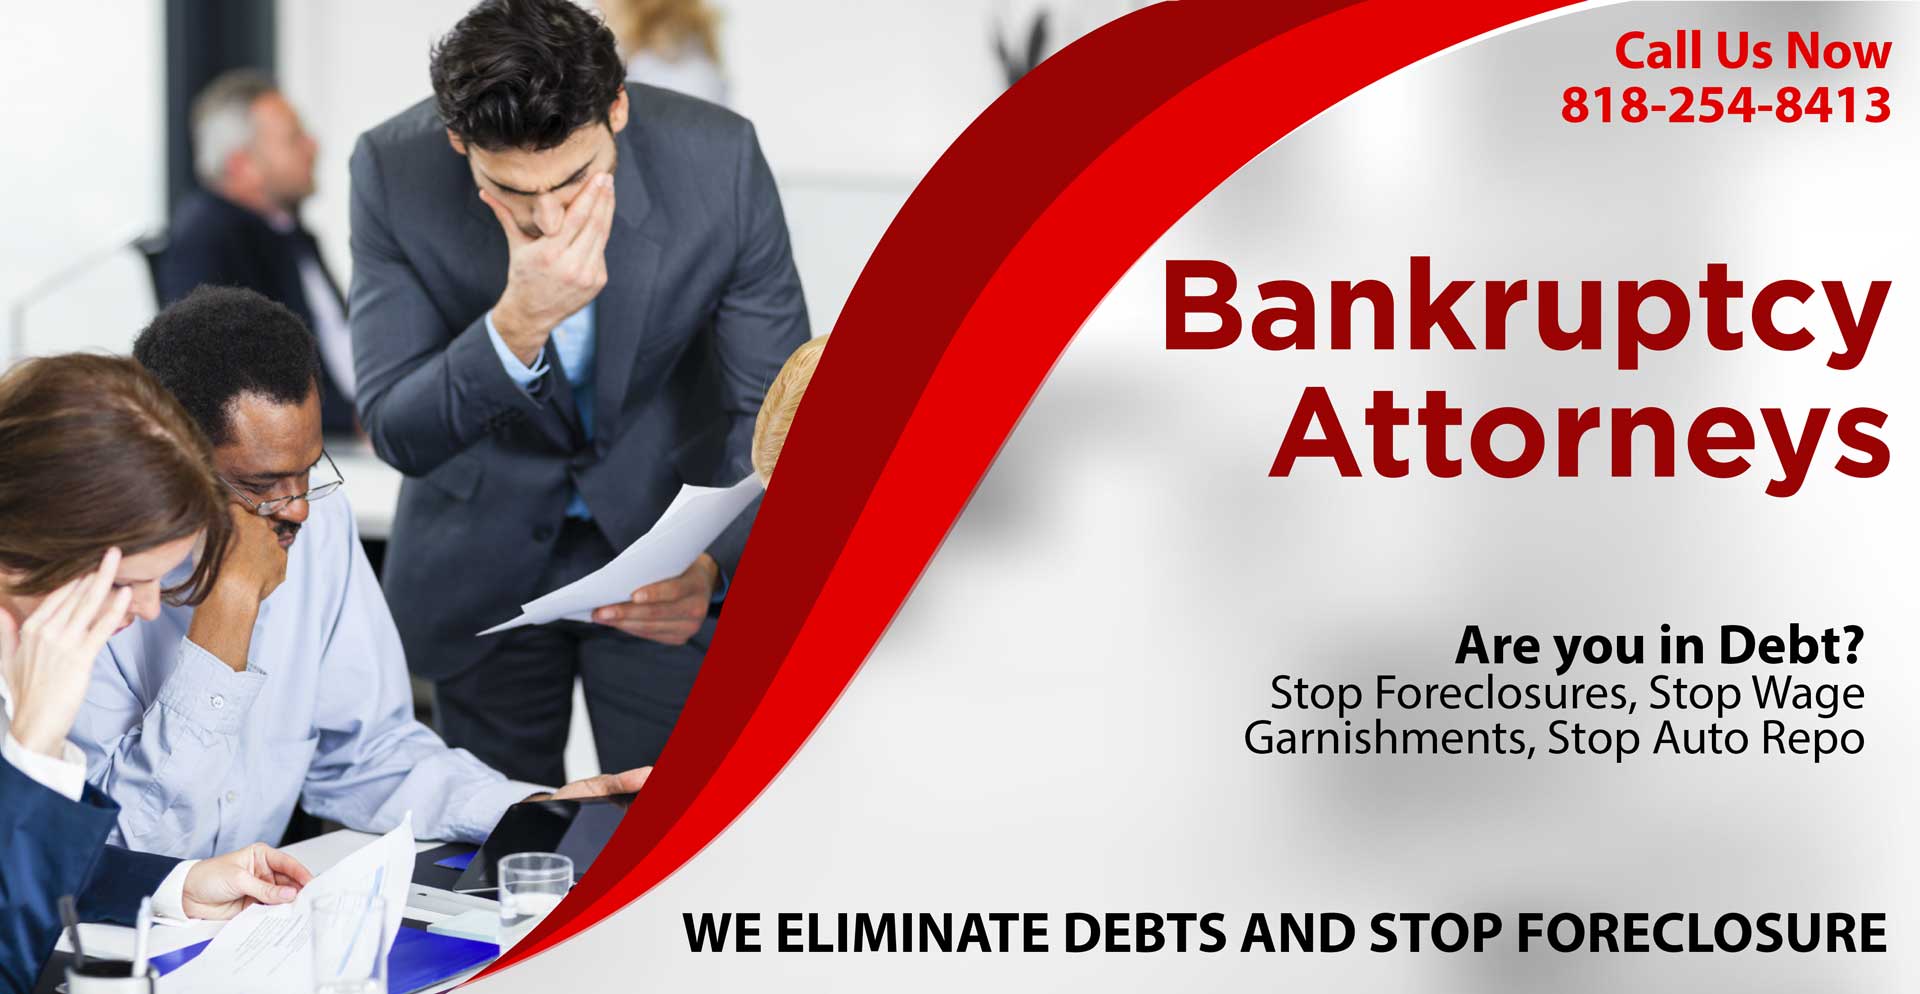 Los Angeles Bankruptcy Attorneys - File Bankruptcy to Eliminate Debts